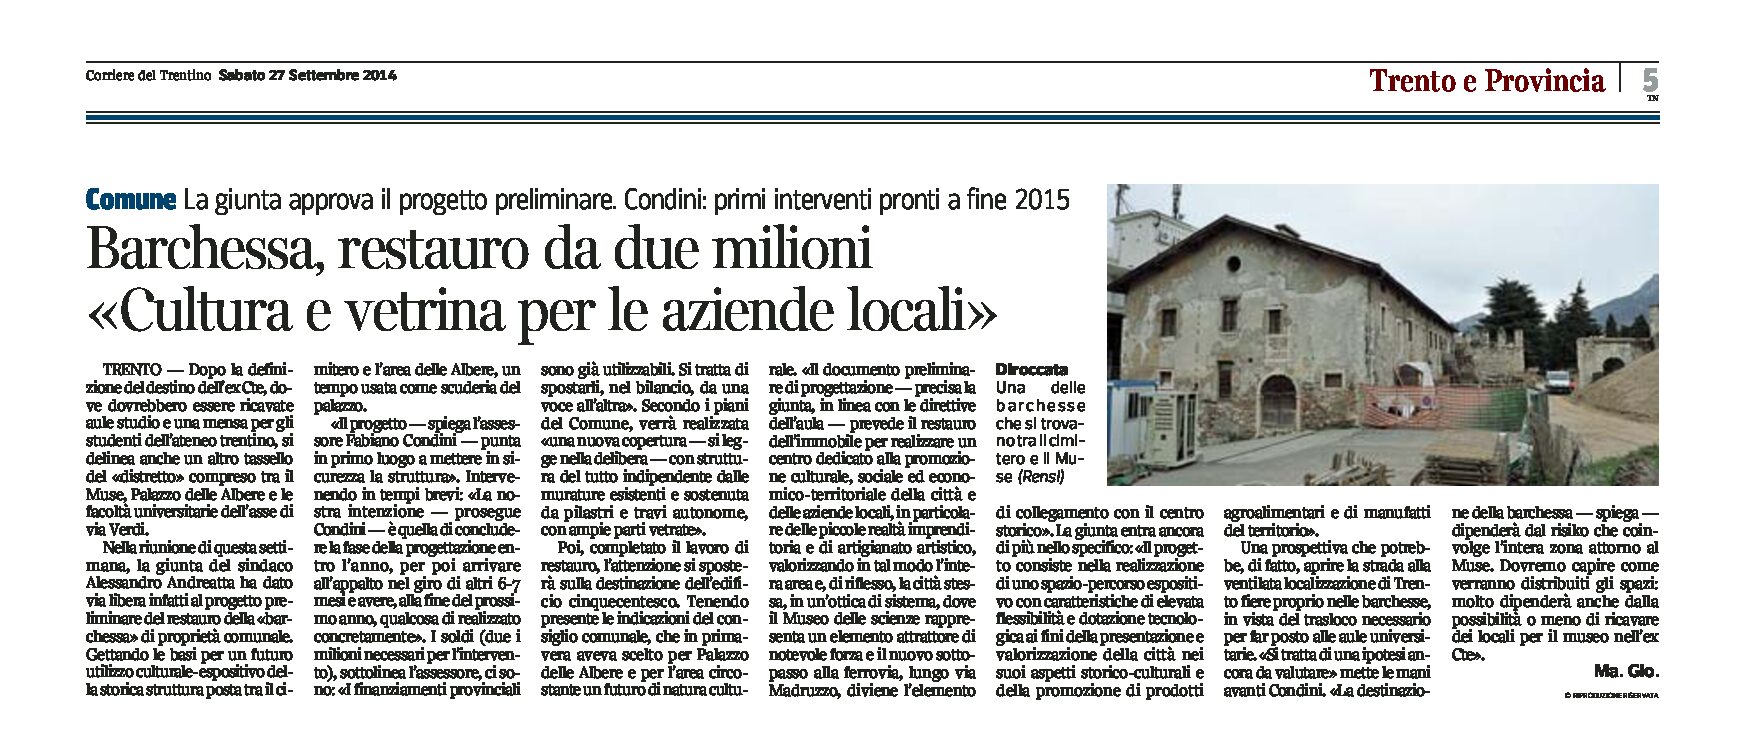 Trento, Albere: Barchessa, restauro da 2 milioni